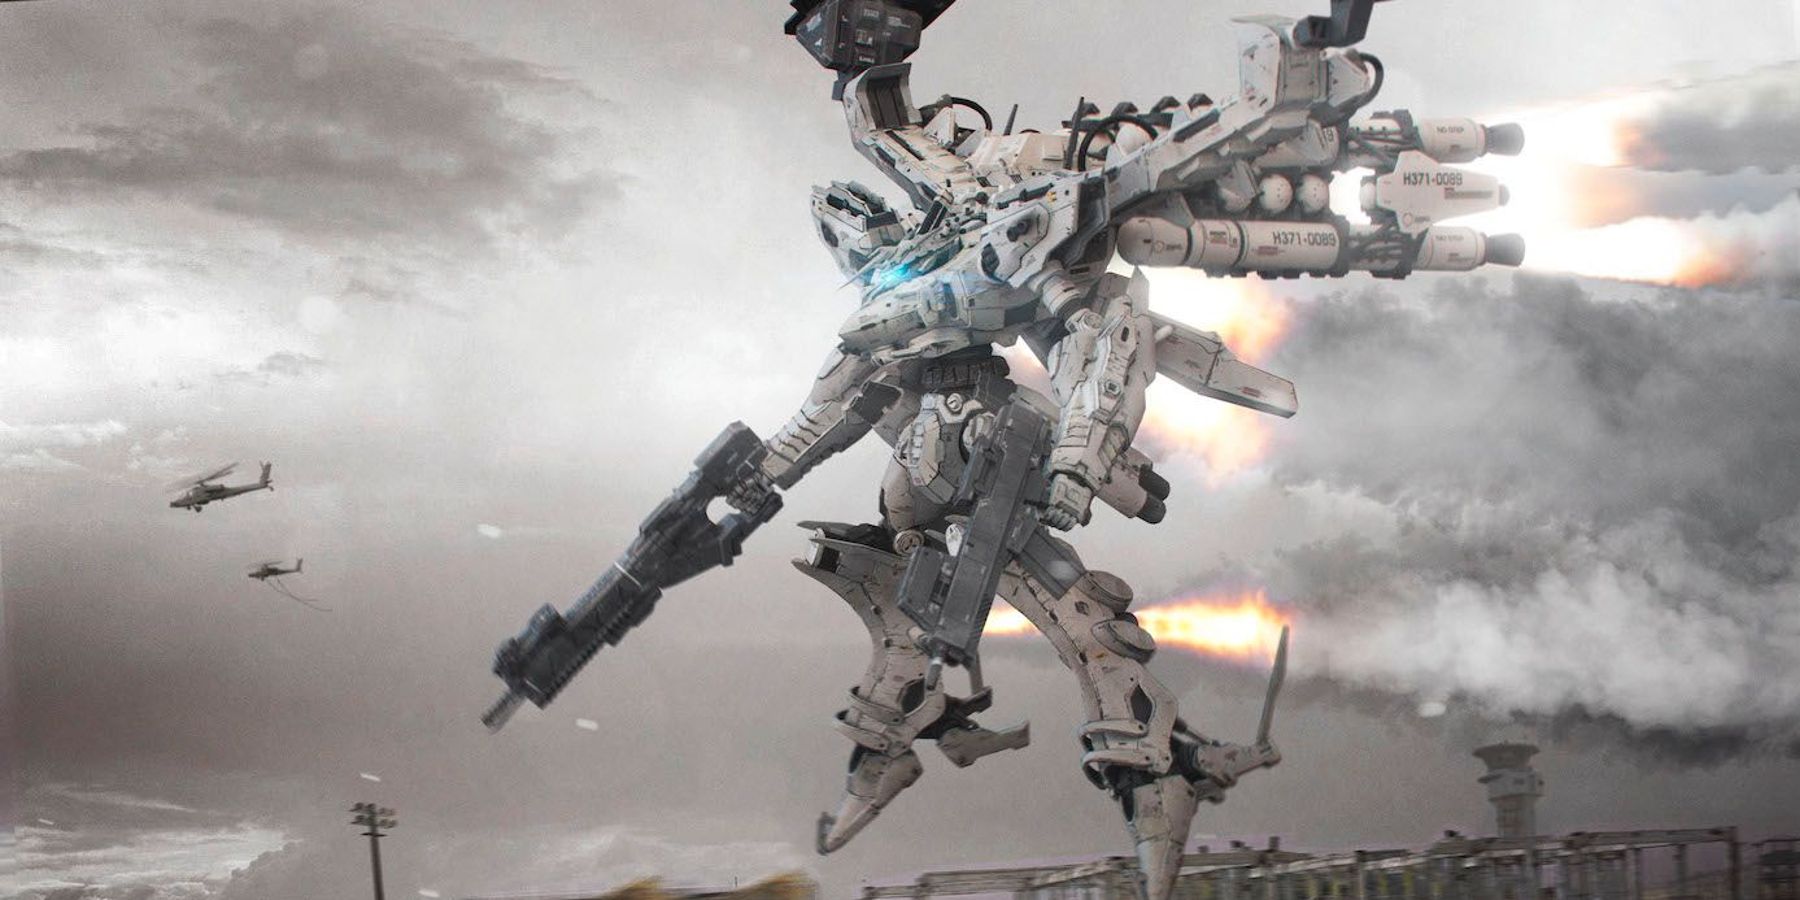 armored-core-fromsoftware-mech-combat-sci-fi-flight